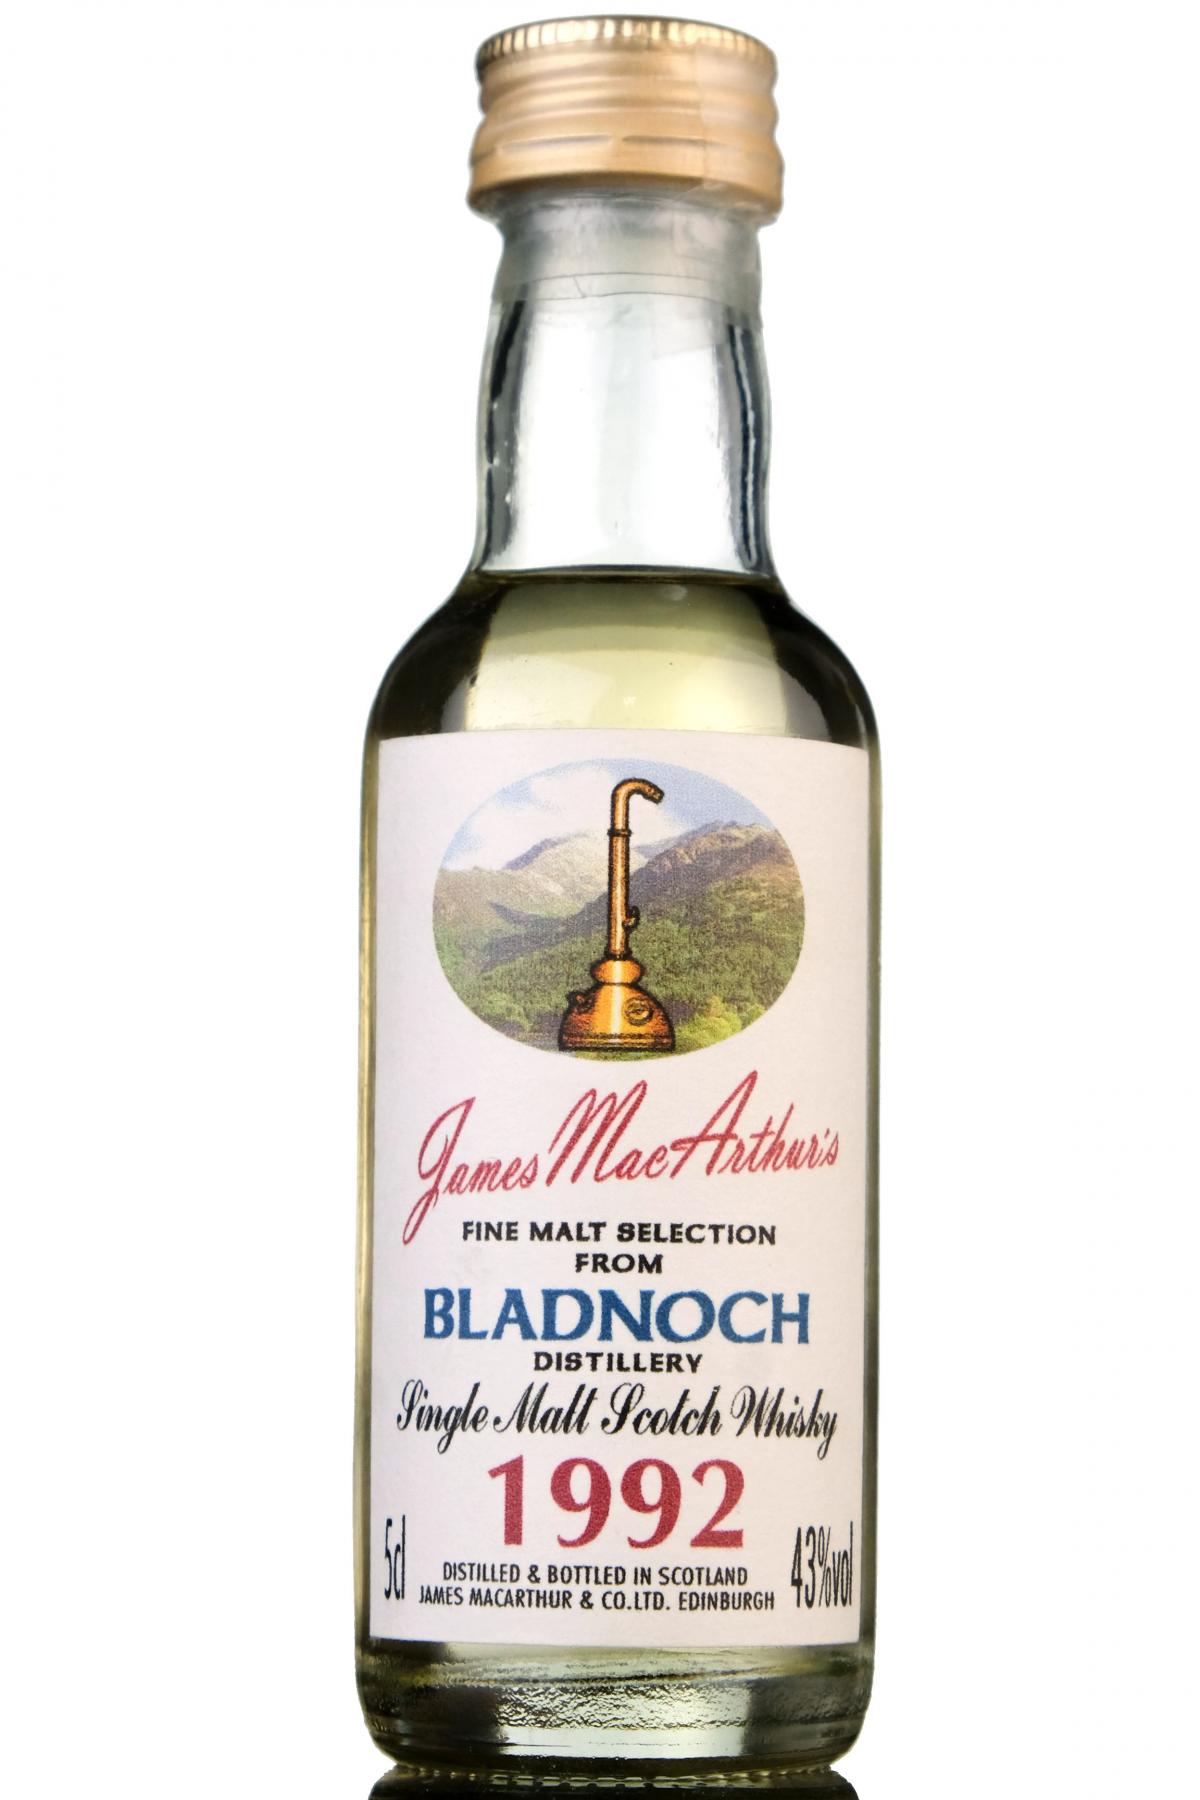 Bladnoch 1992 - James MacArthur - Fine Malt Selection Miniature